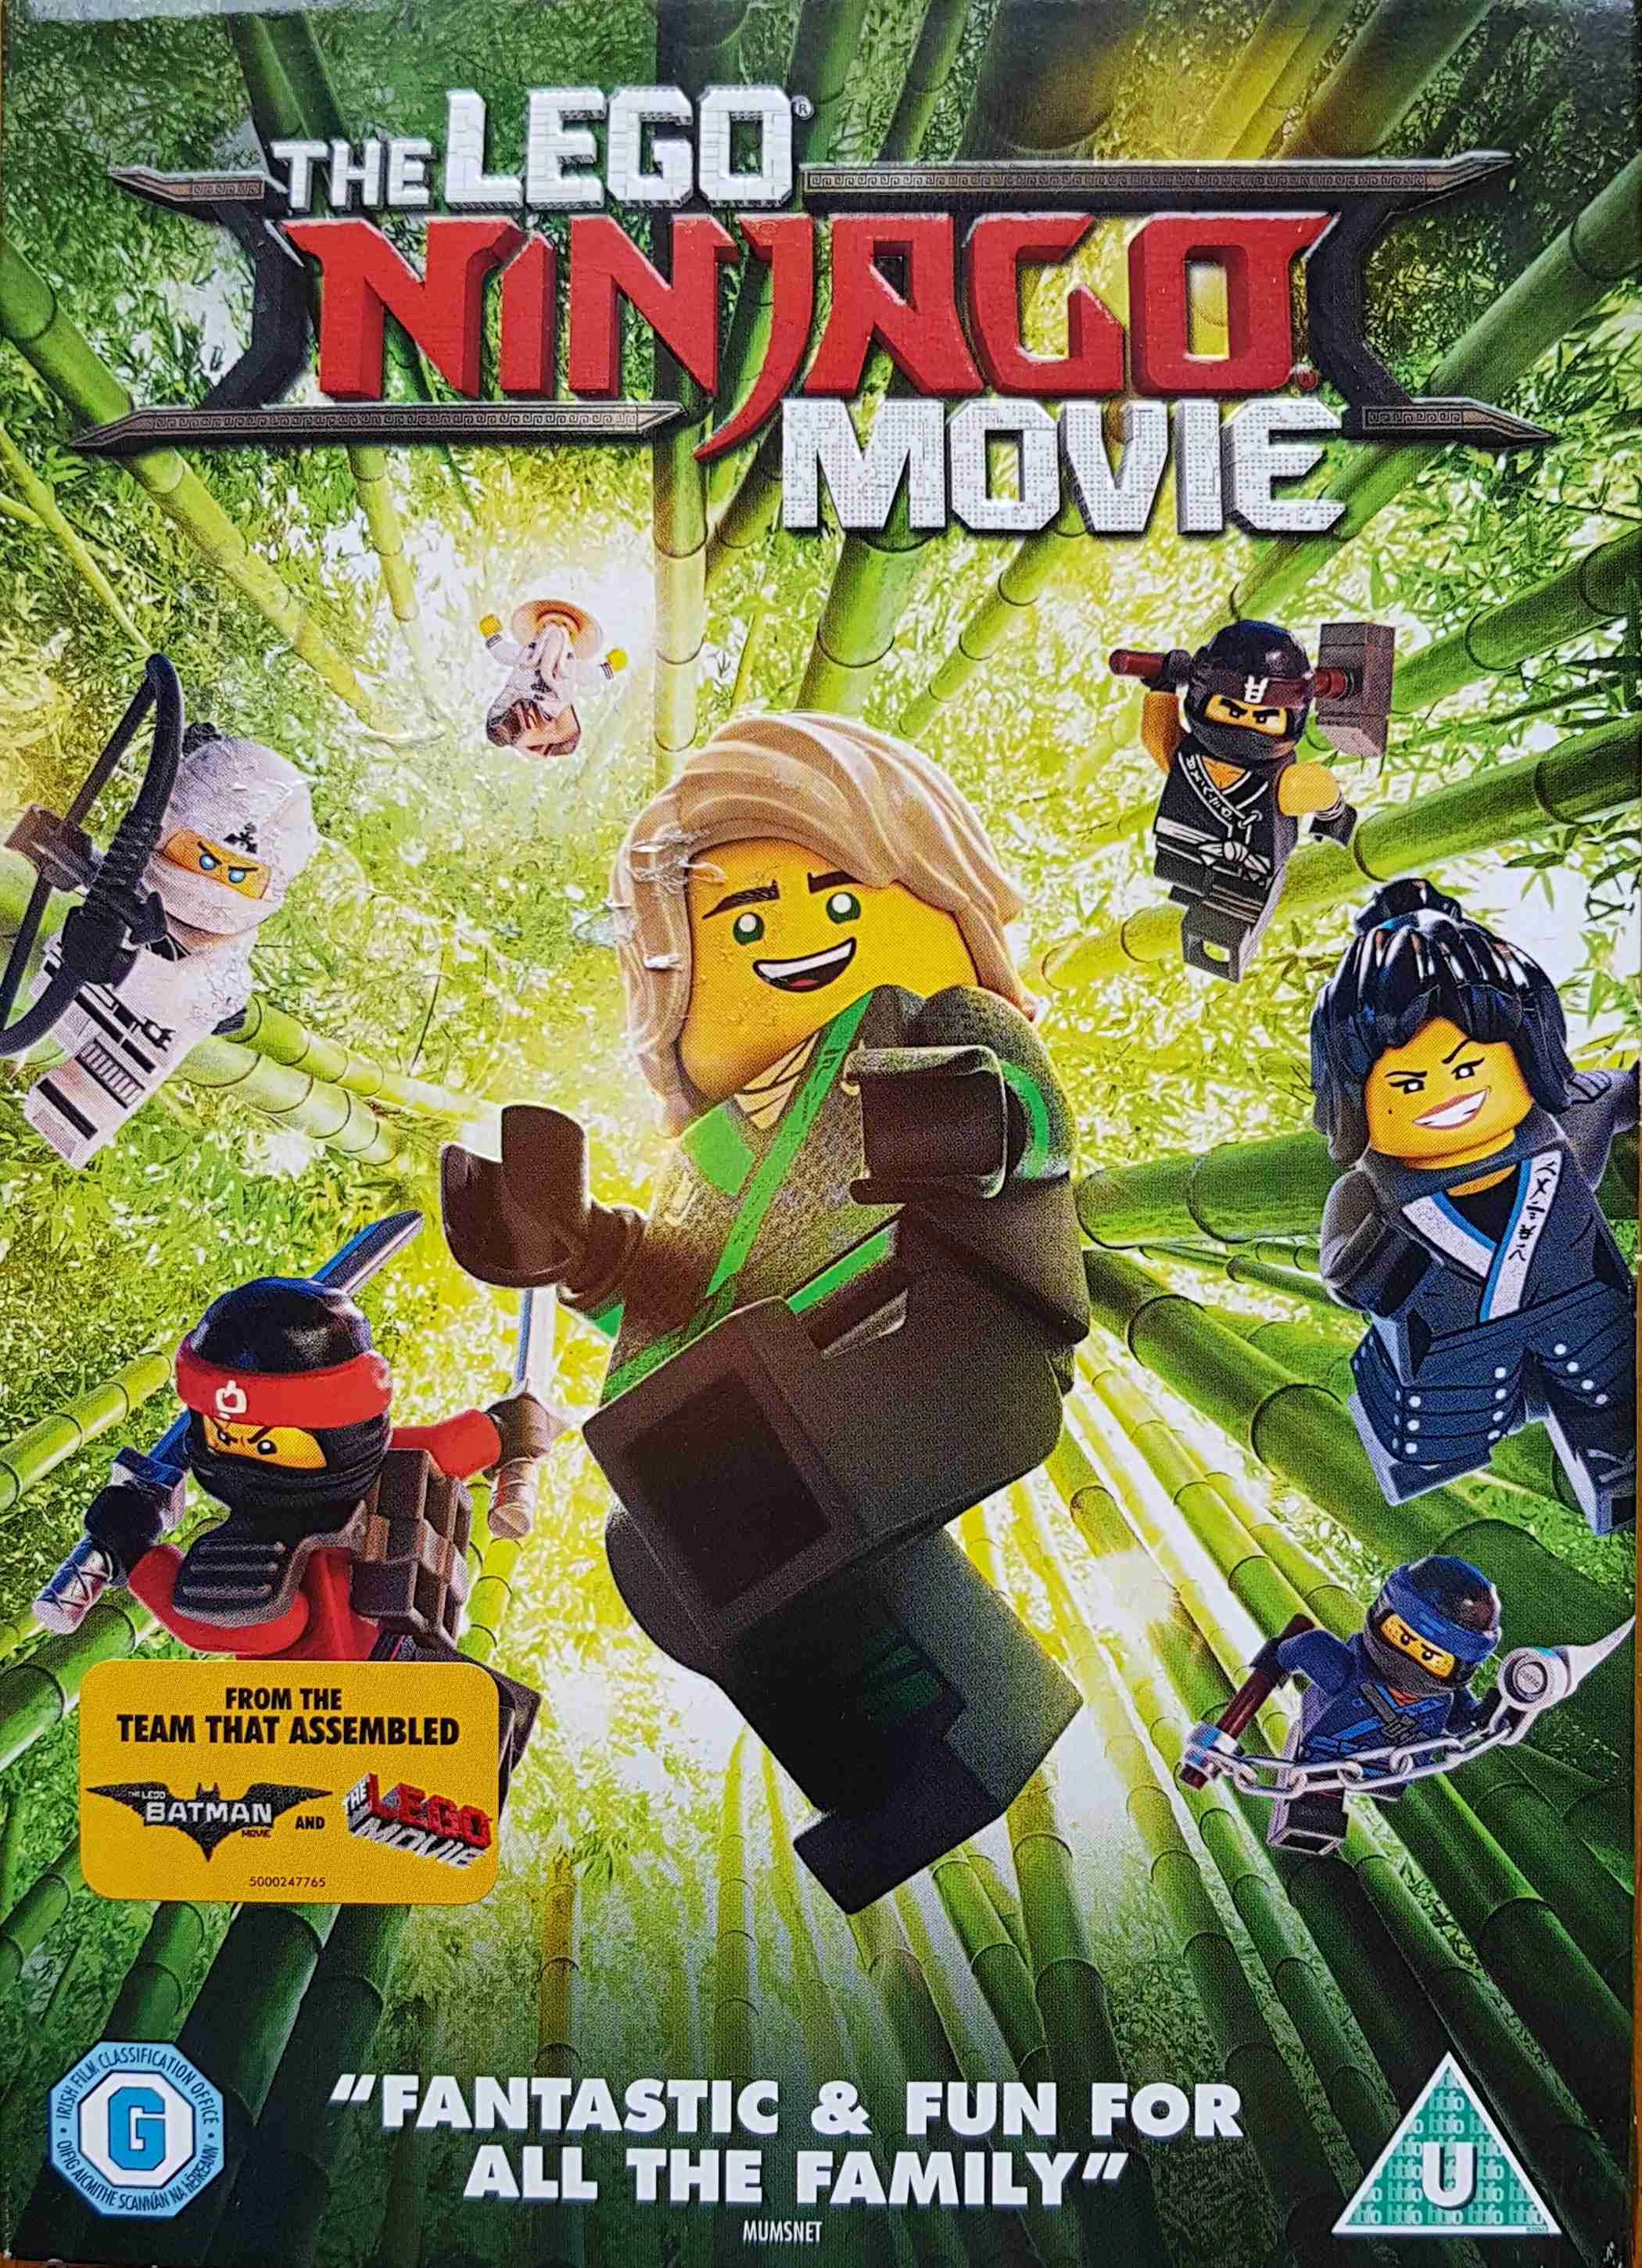 Picture of 1000697501 The Lego Ninjago movie by artist Hilary Winston / Bob Logan / Paul Fisher / William Wheeler / Tom Wheeler / Dan Hageman / Kevin Hageman 